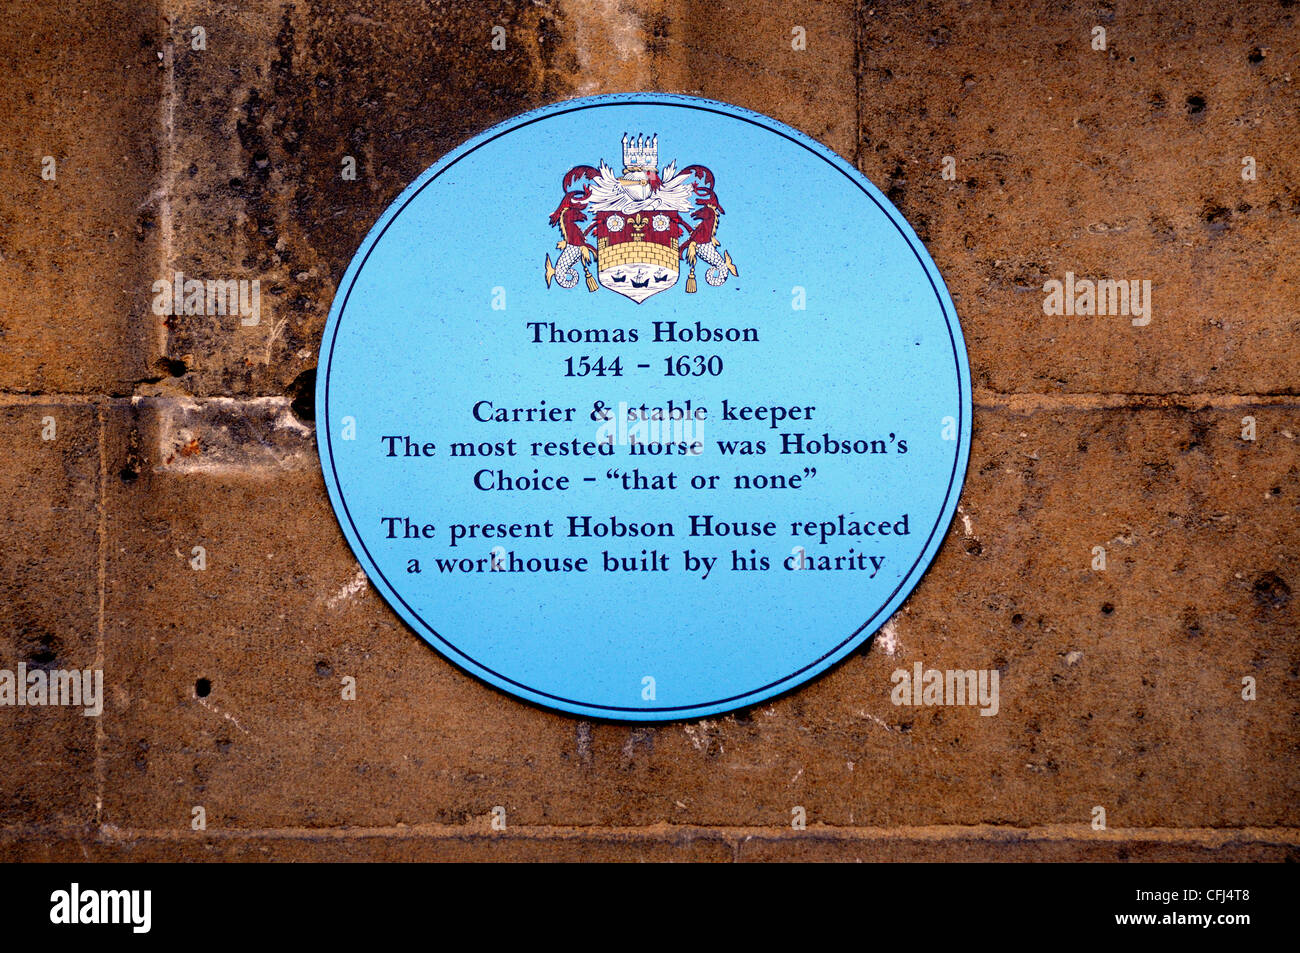 Thomas Hobson "Hobson's Choice" de placa, St Andrews Street, Cambridge, Inglaterra, Reino Unido. Foto de stock